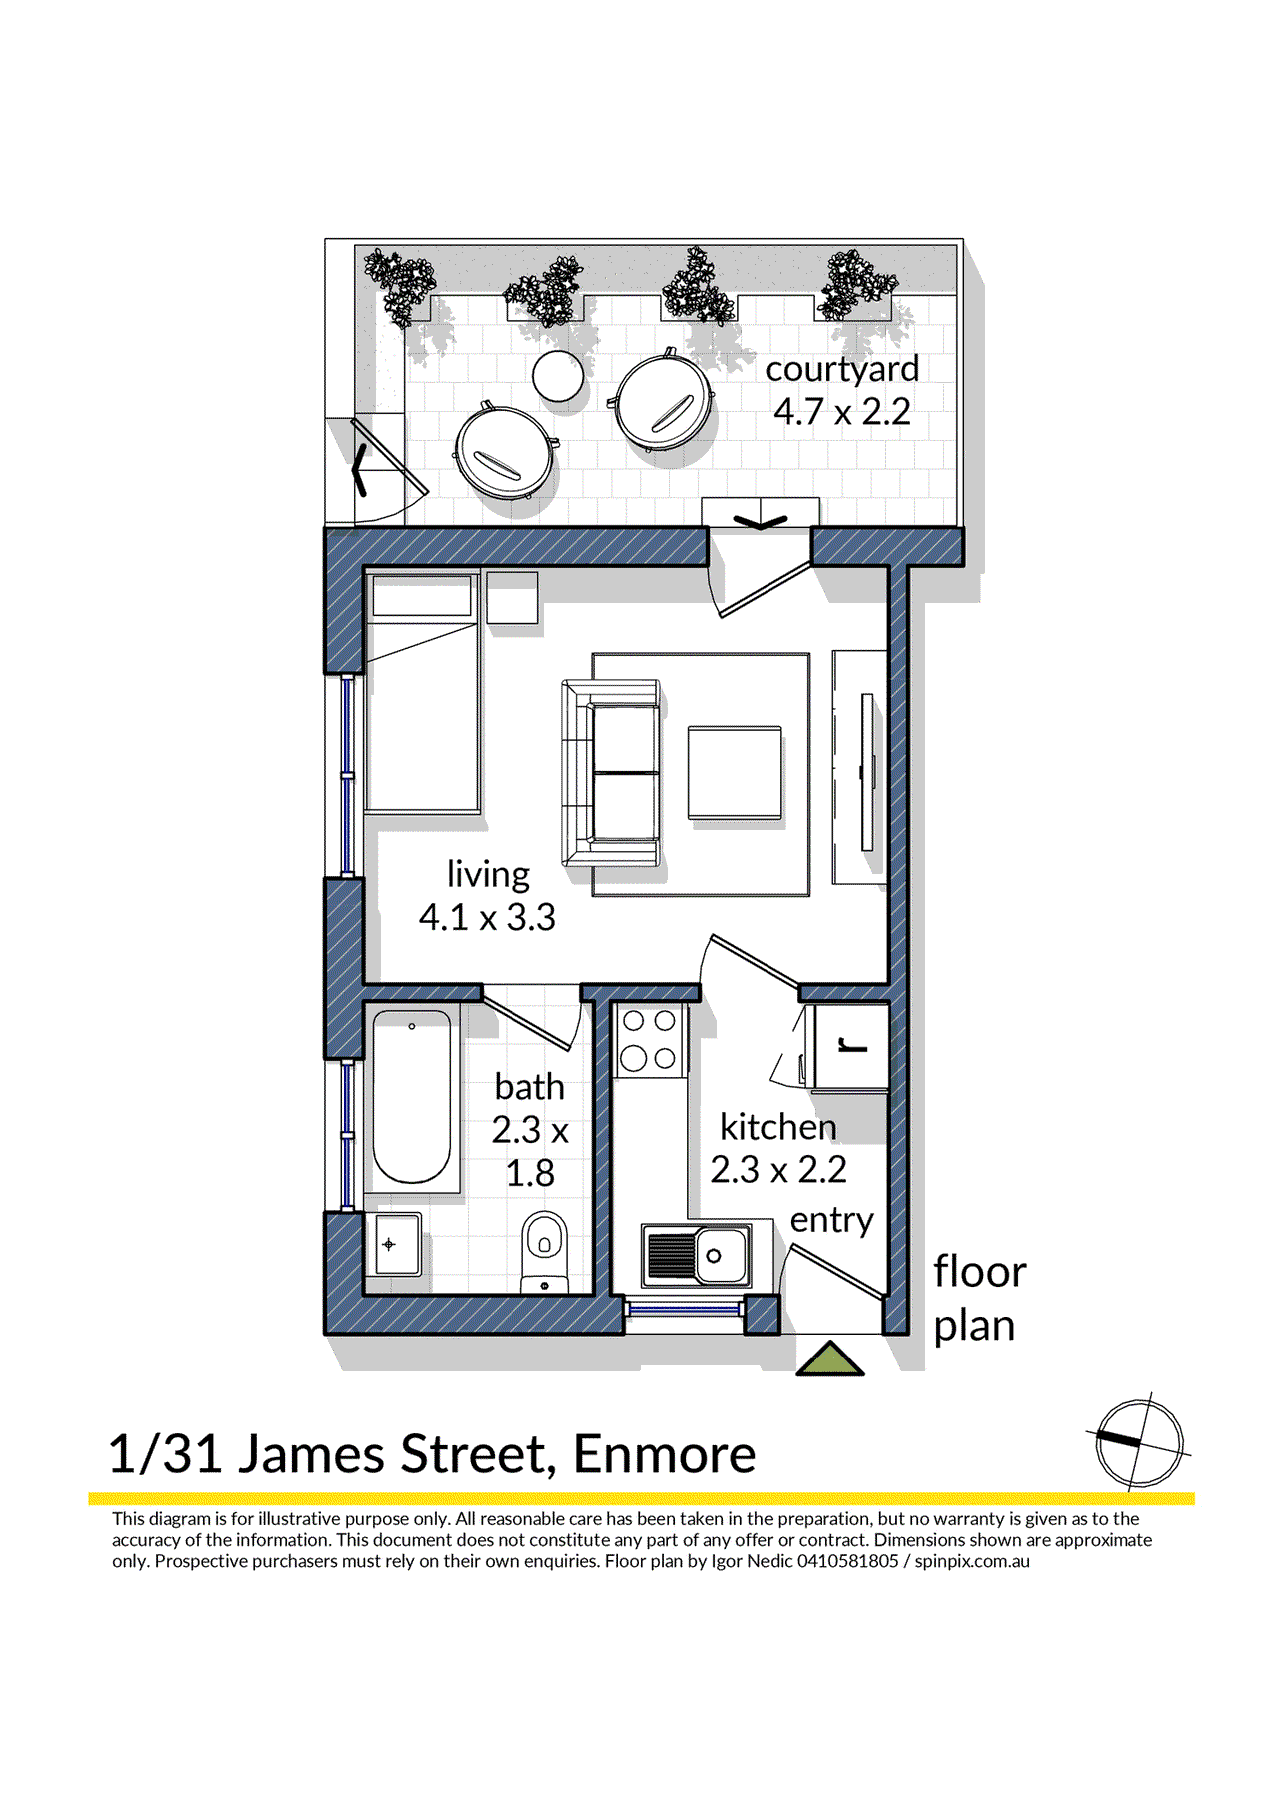 1/31 James Street, ENMORE, NSW 2042